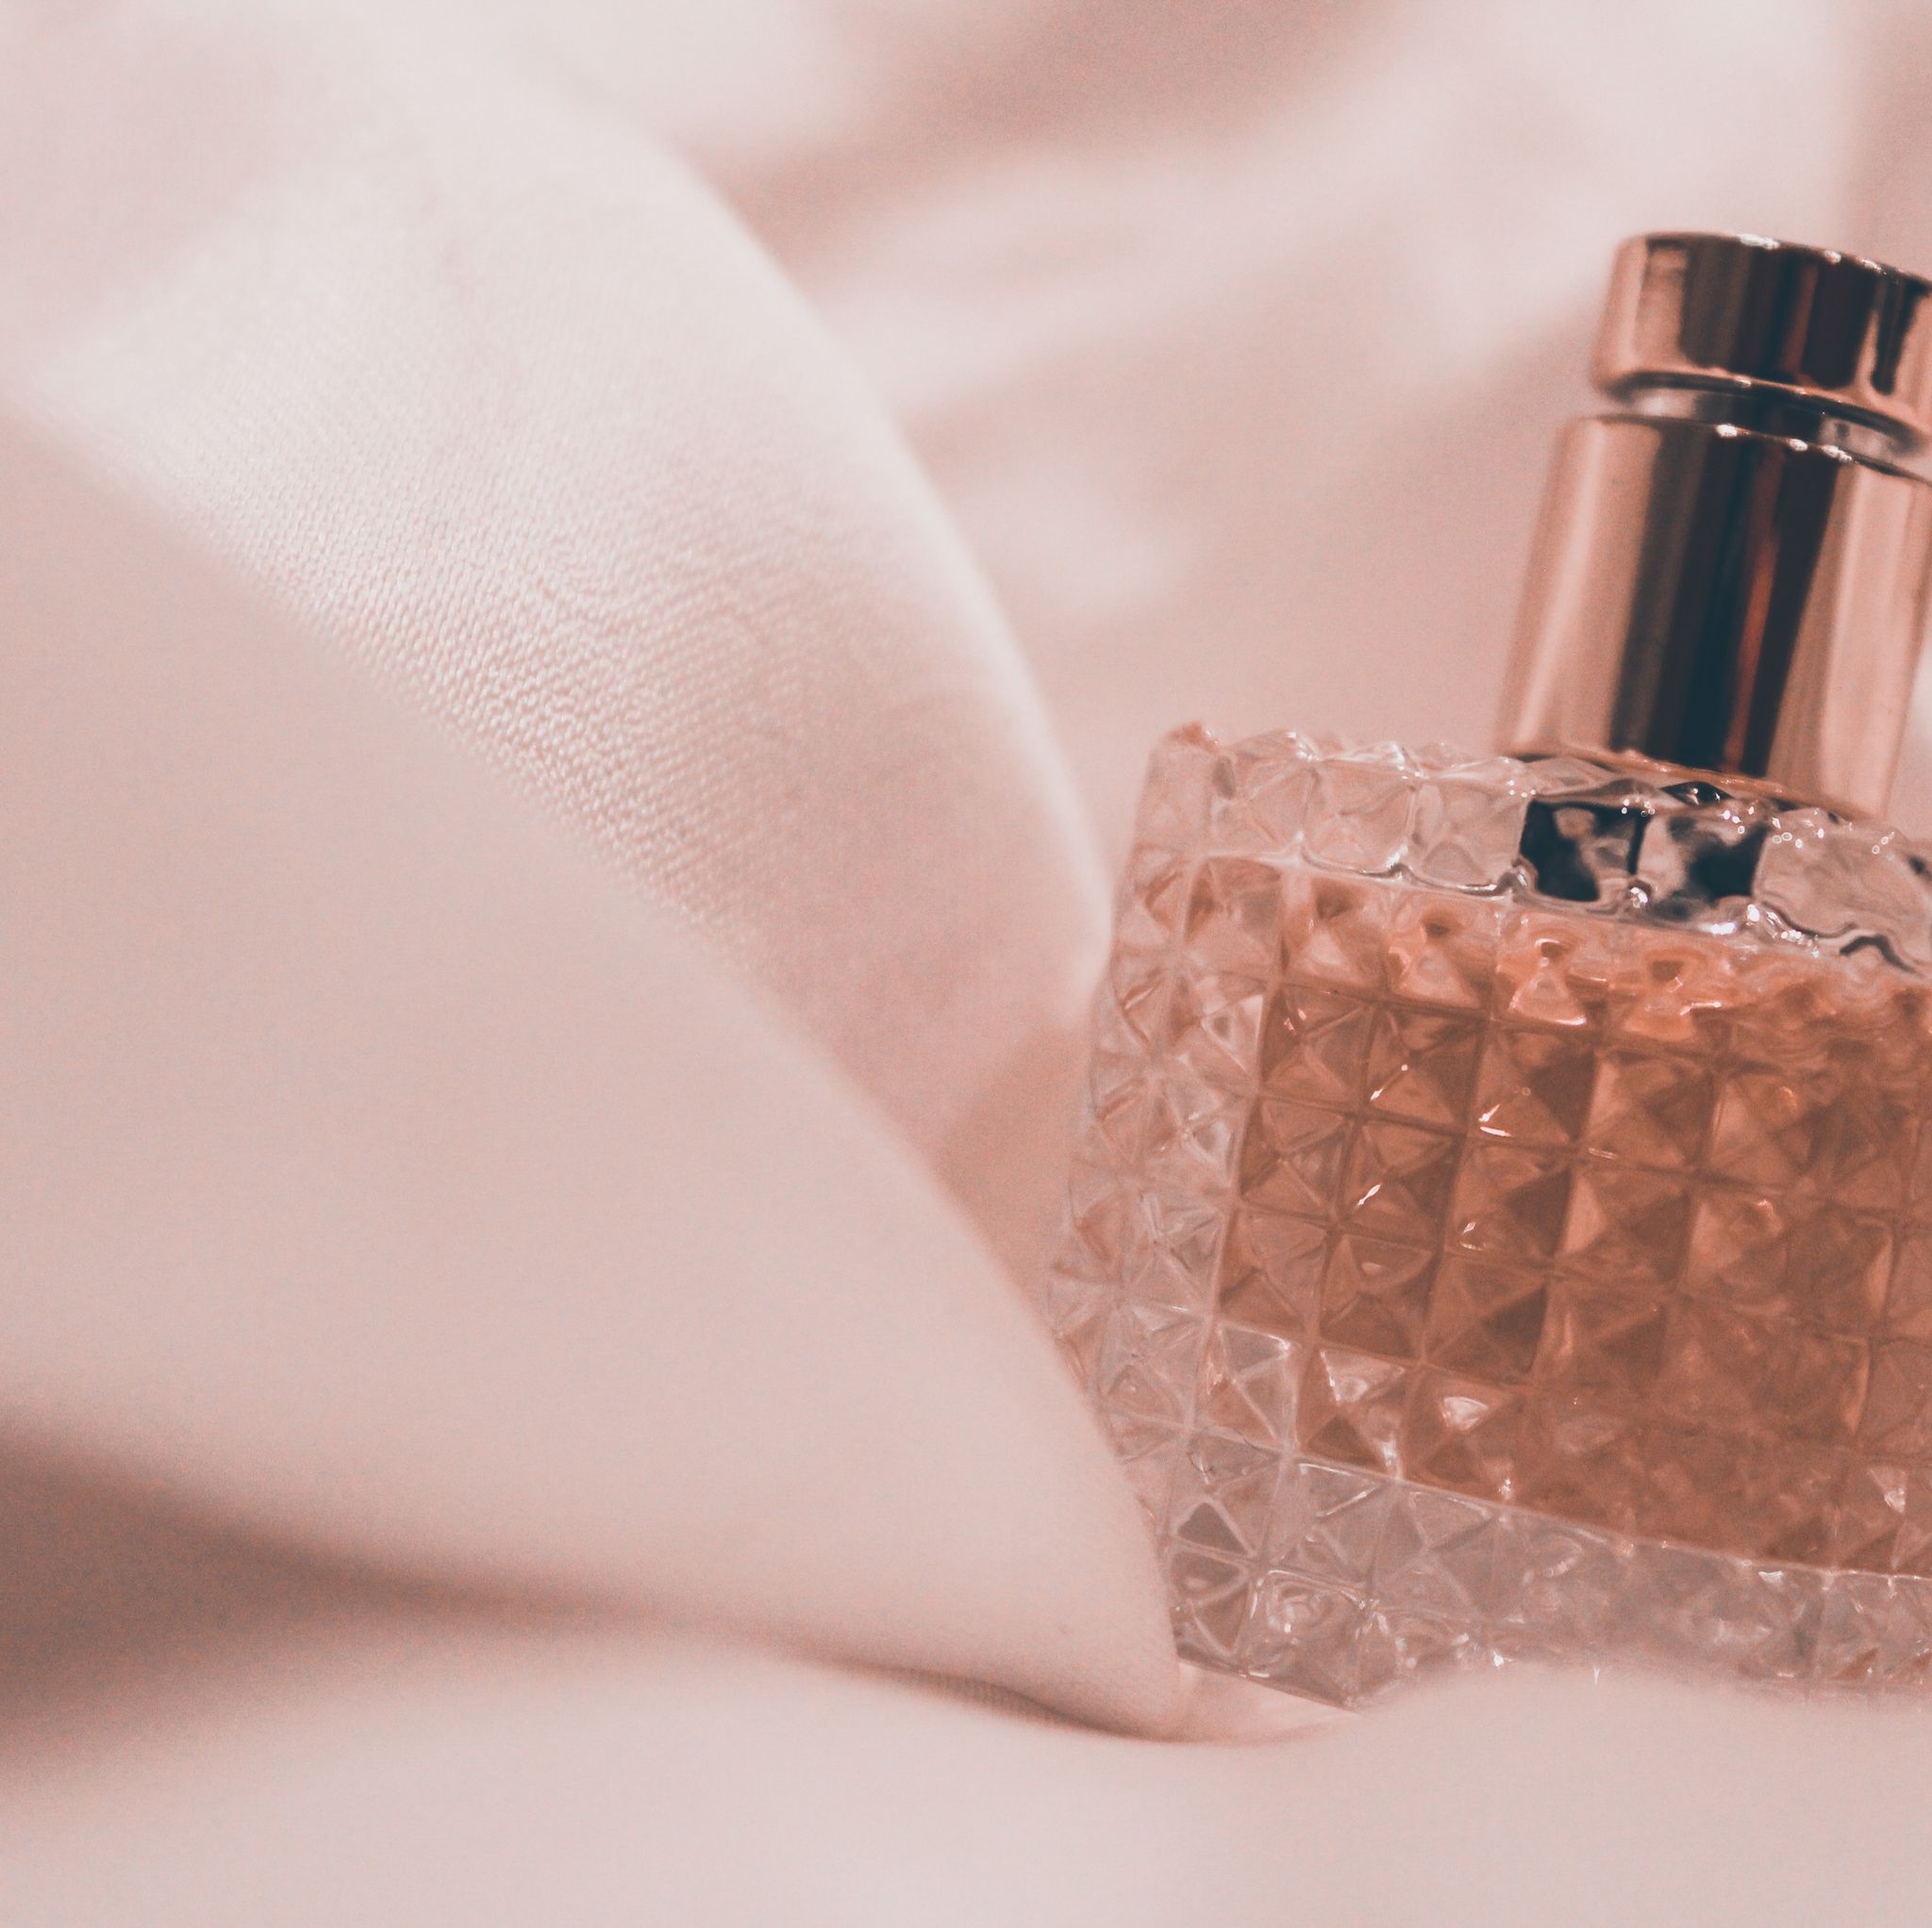 Marc Jacobs Fragrances Introduces New Women's Fragrance “Daisy